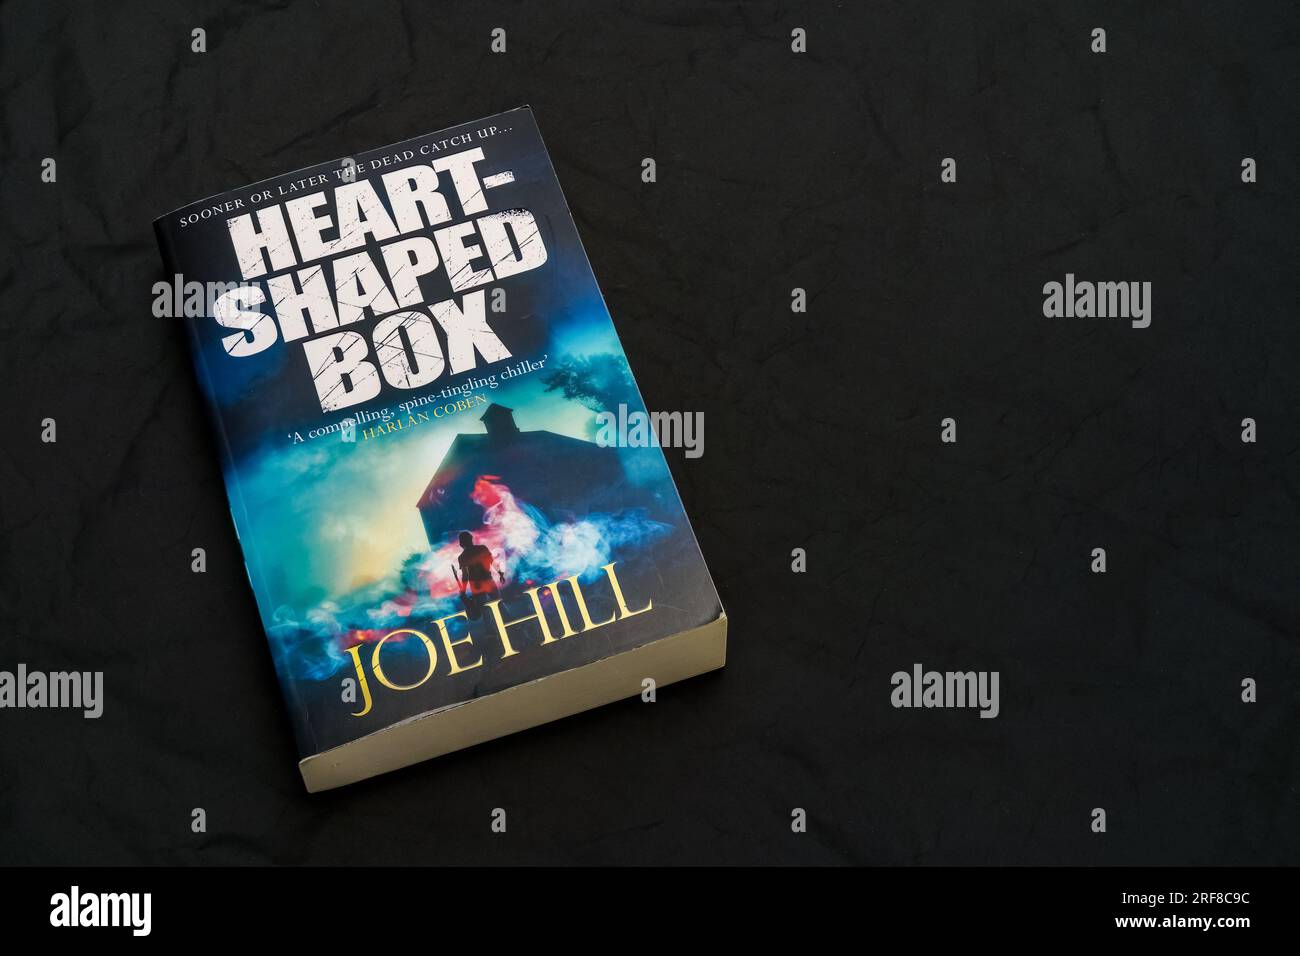 Heart Shaped Box by Joe Hill on dark surface. Lahti, Finland. June 18, 2023. Stock Photo